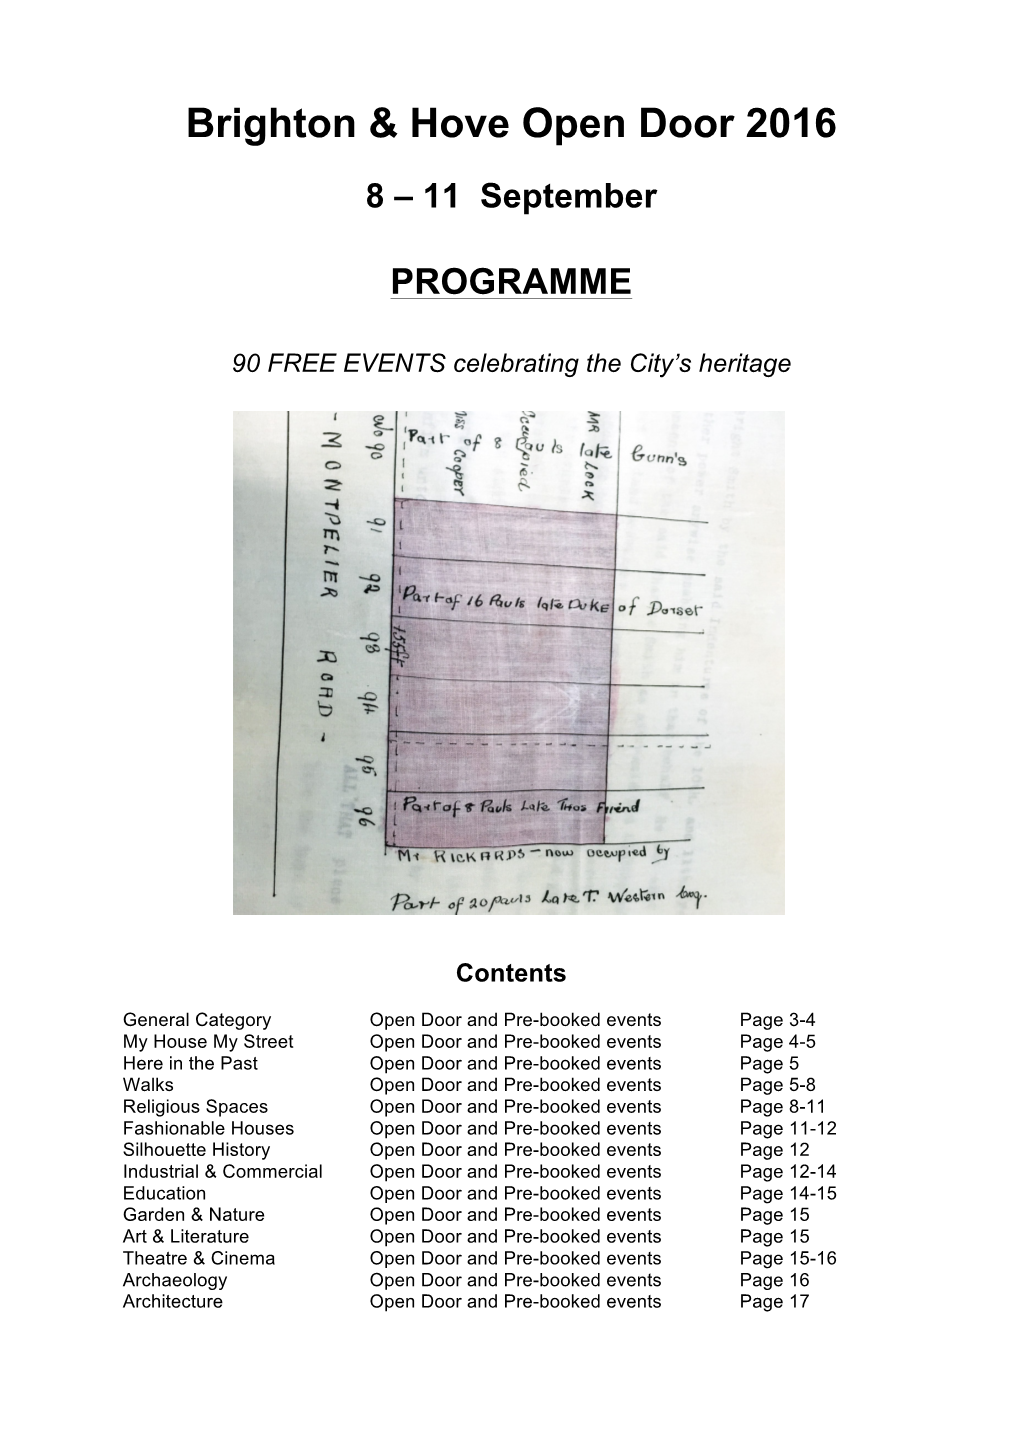 BHOD Programme 2016